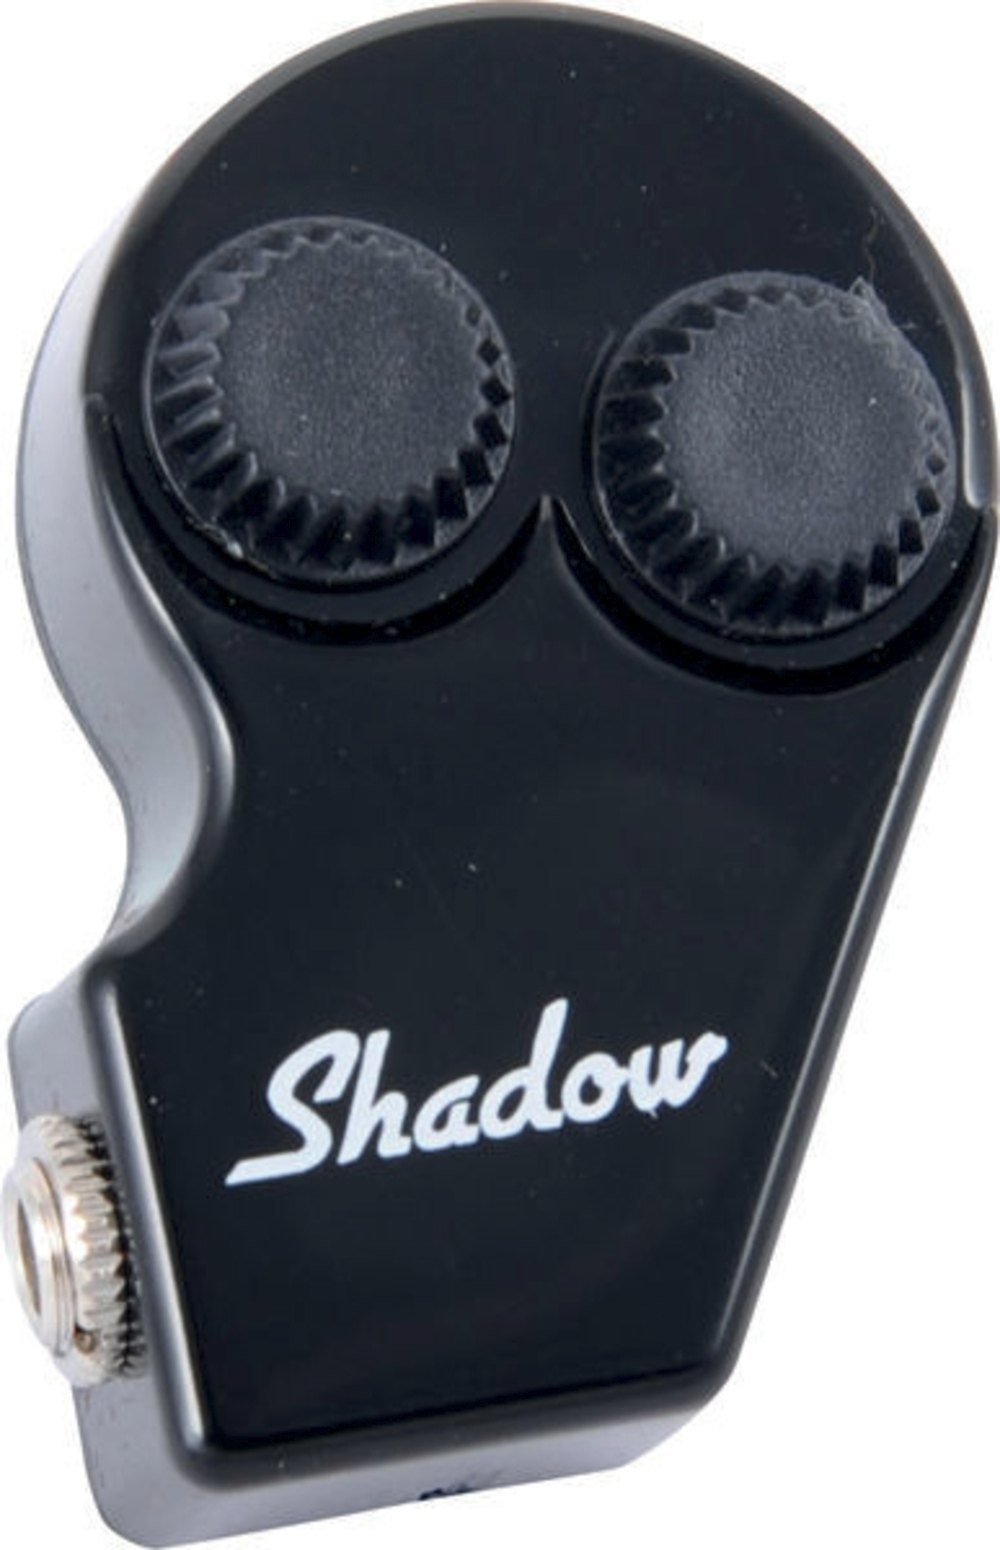 Guitar pickup Shadow SH 2000 Universal Transducer Pickup